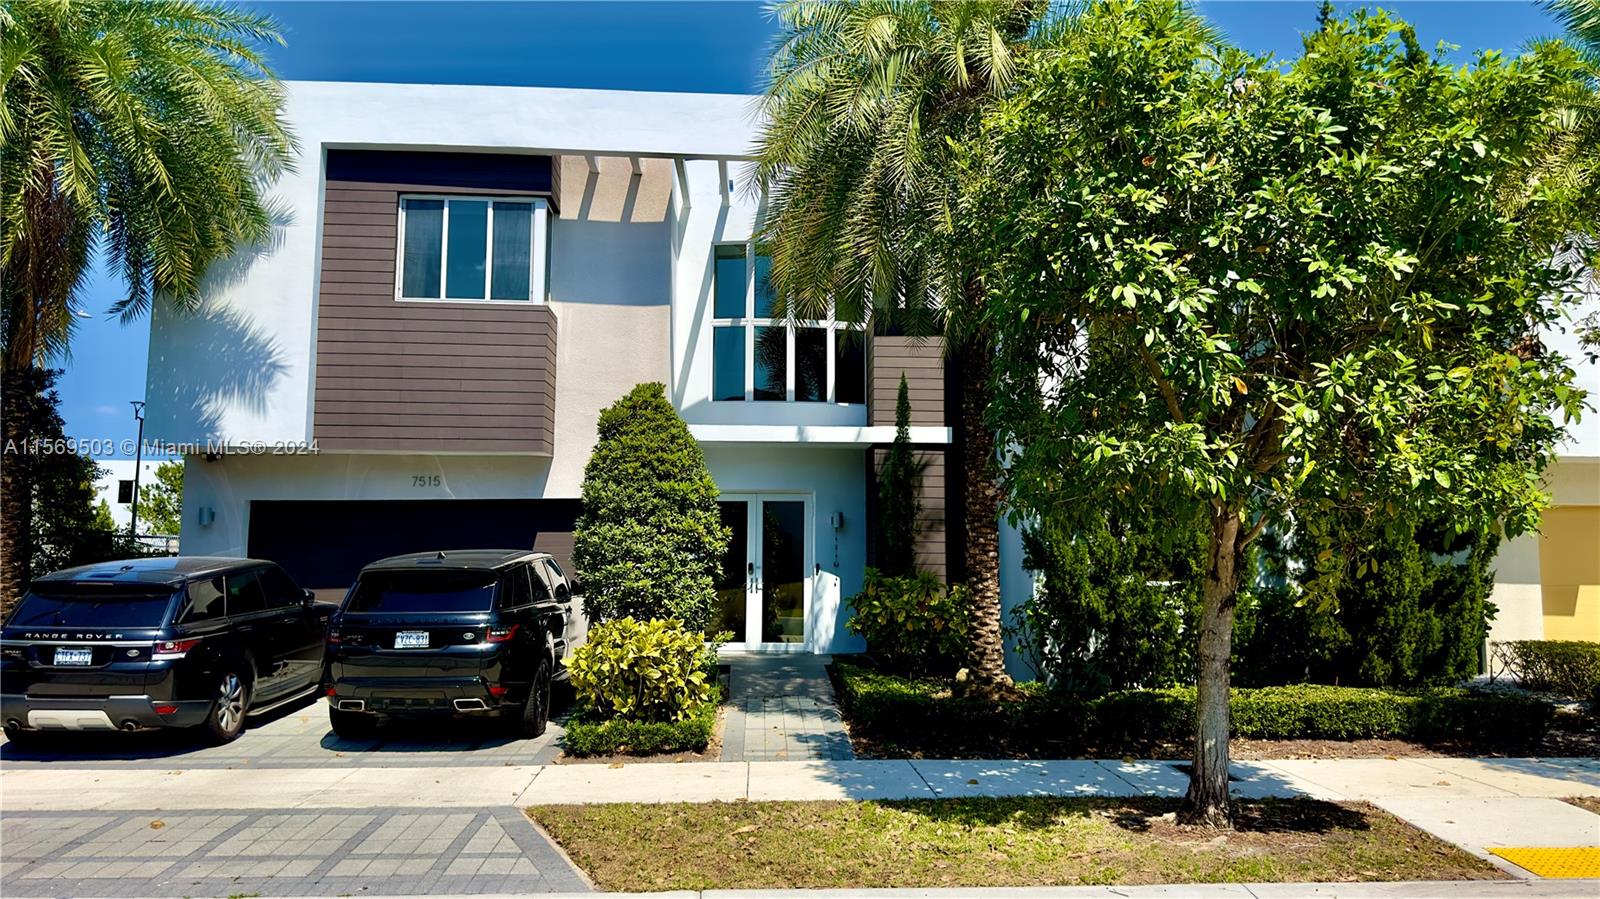 Rental Property at 7515 Nw 99th Ave, Doral, Miami-Dade County, Florida - Bedrooms: 6 
Bathrooms: 7  - $20,000 MO.